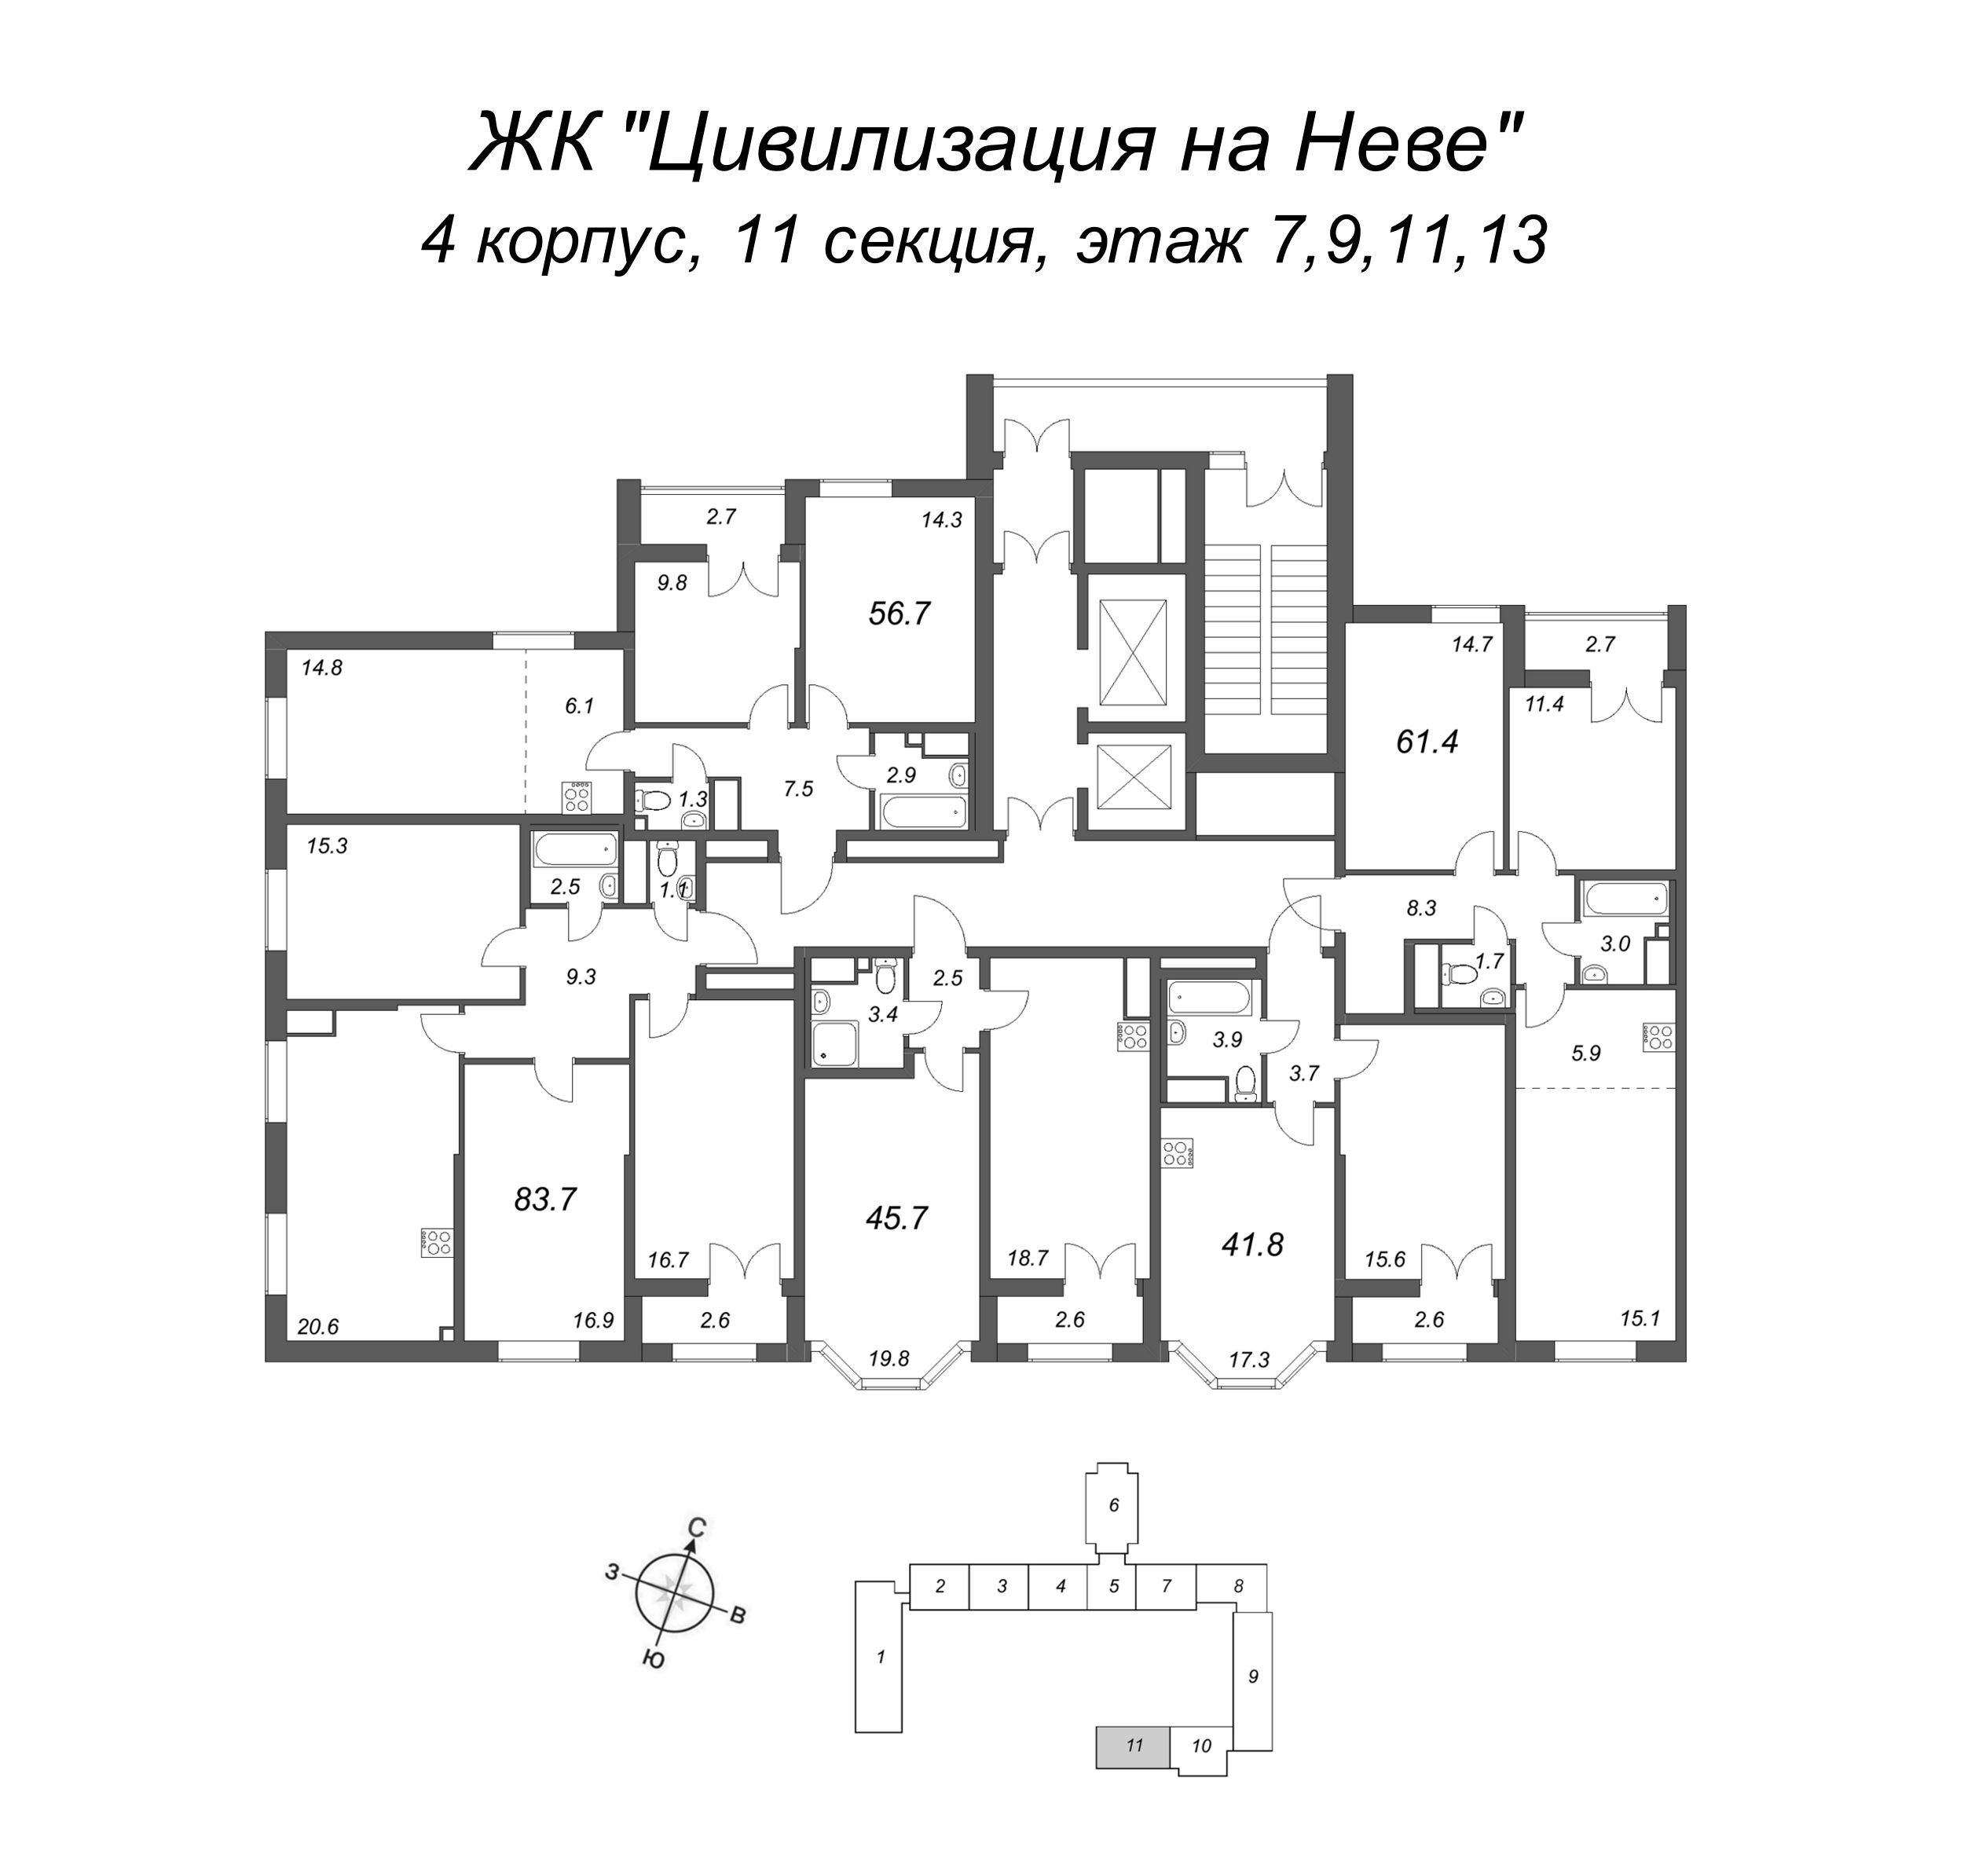 4-комнатная (Евро) квартира, 83.7 м² - планировка этажа